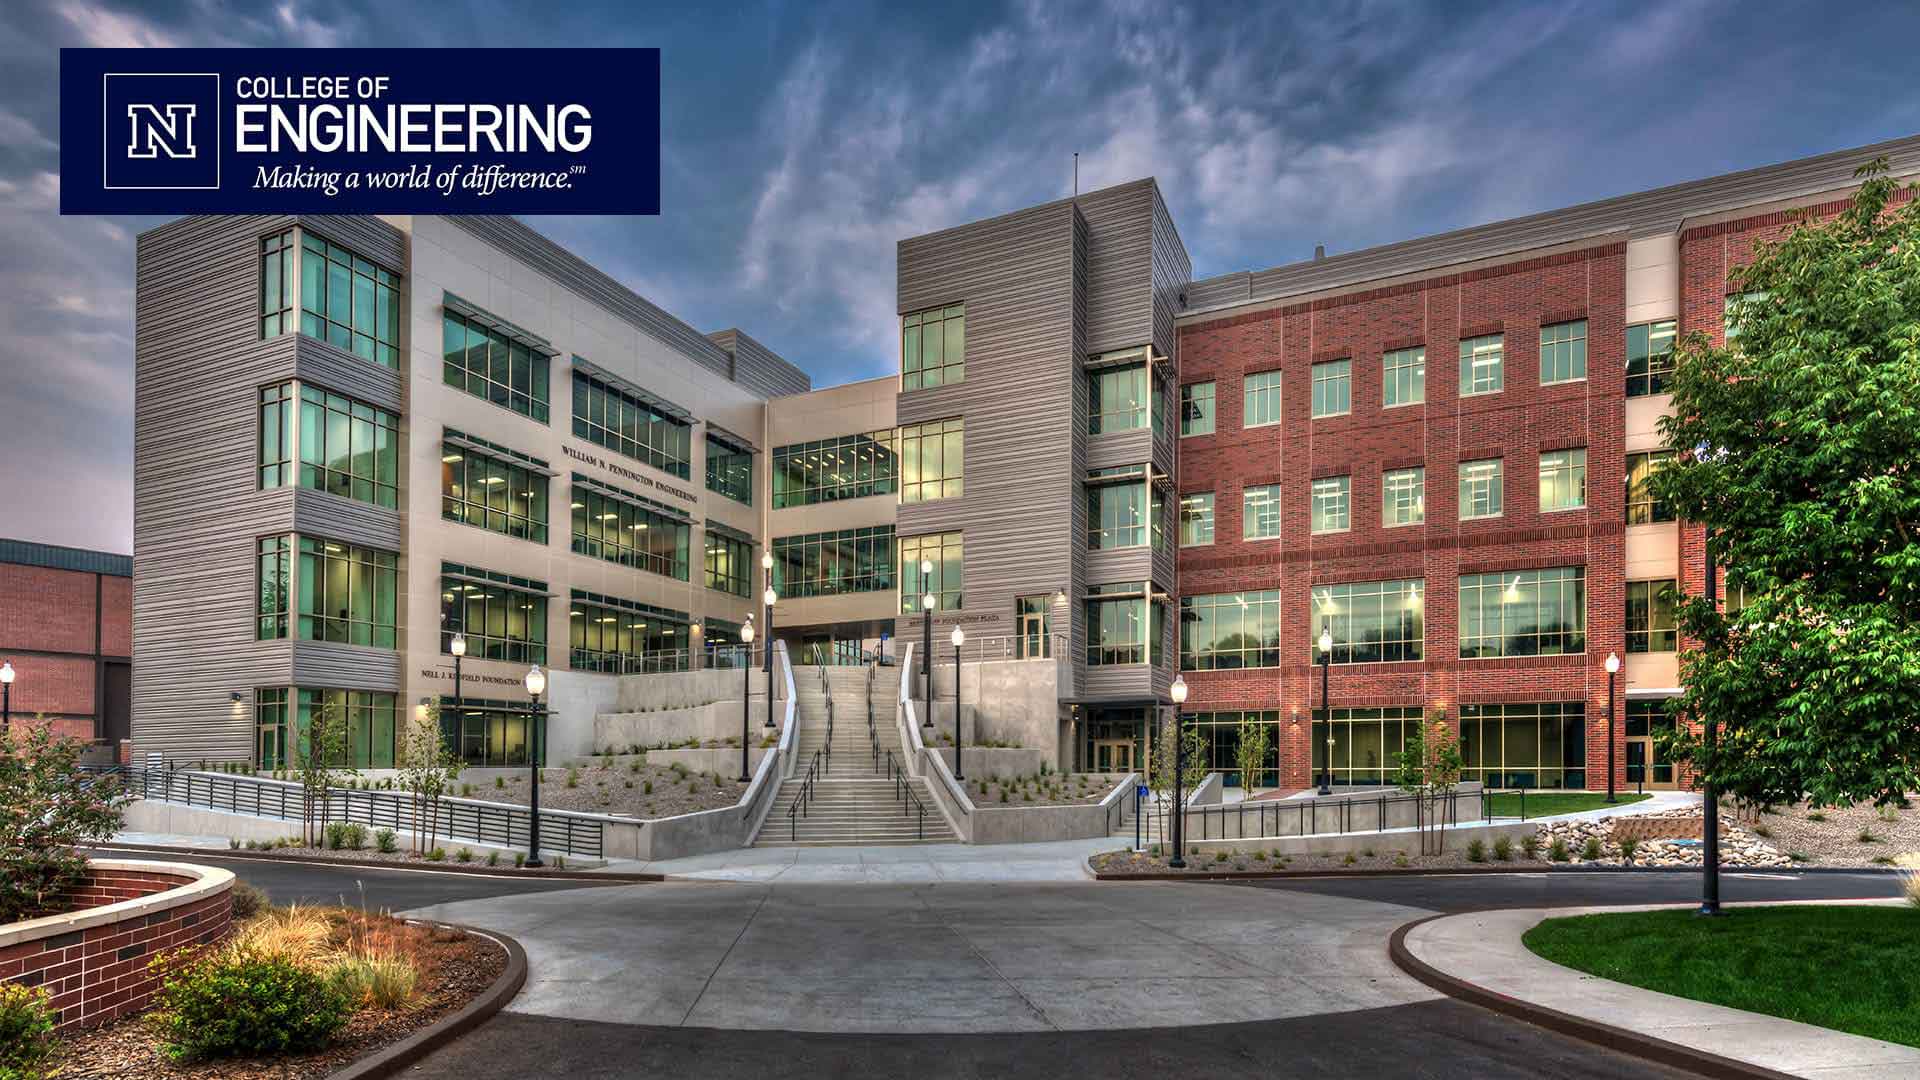 William N. Pennington Engineering Building with College of Engineering logo